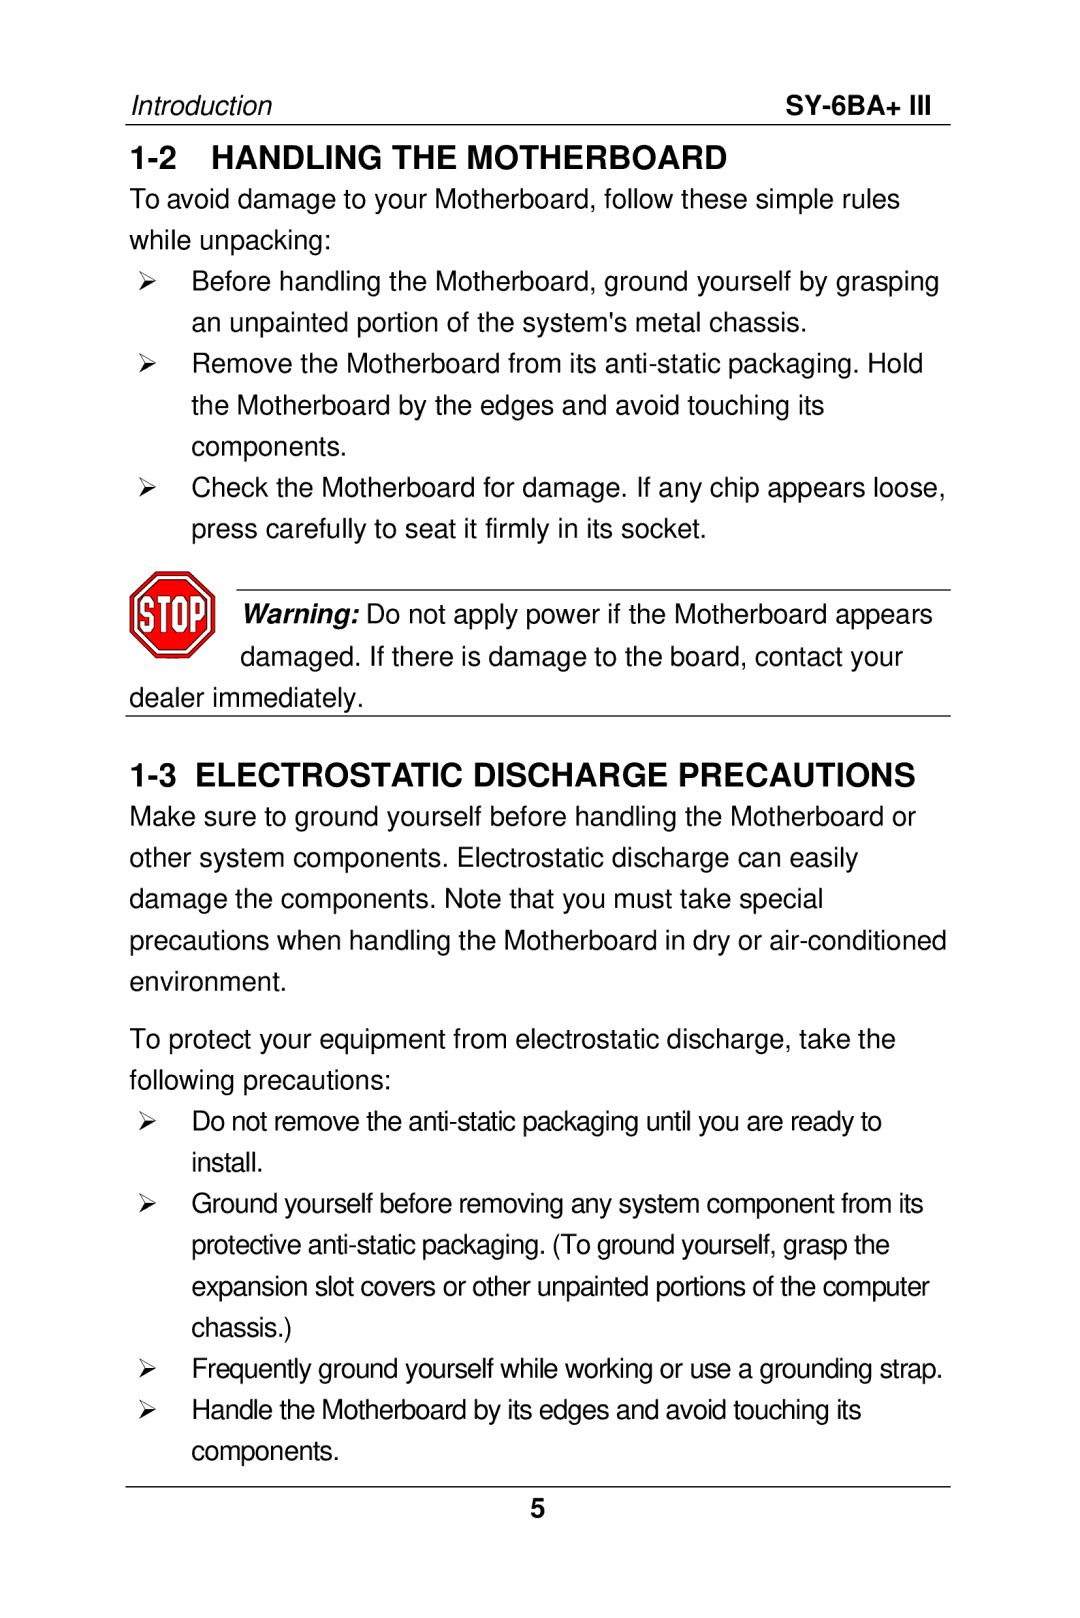 SOYO SY-6BA+ III manual Handling the Motherboard, Electrostatic Discharge Precautions 